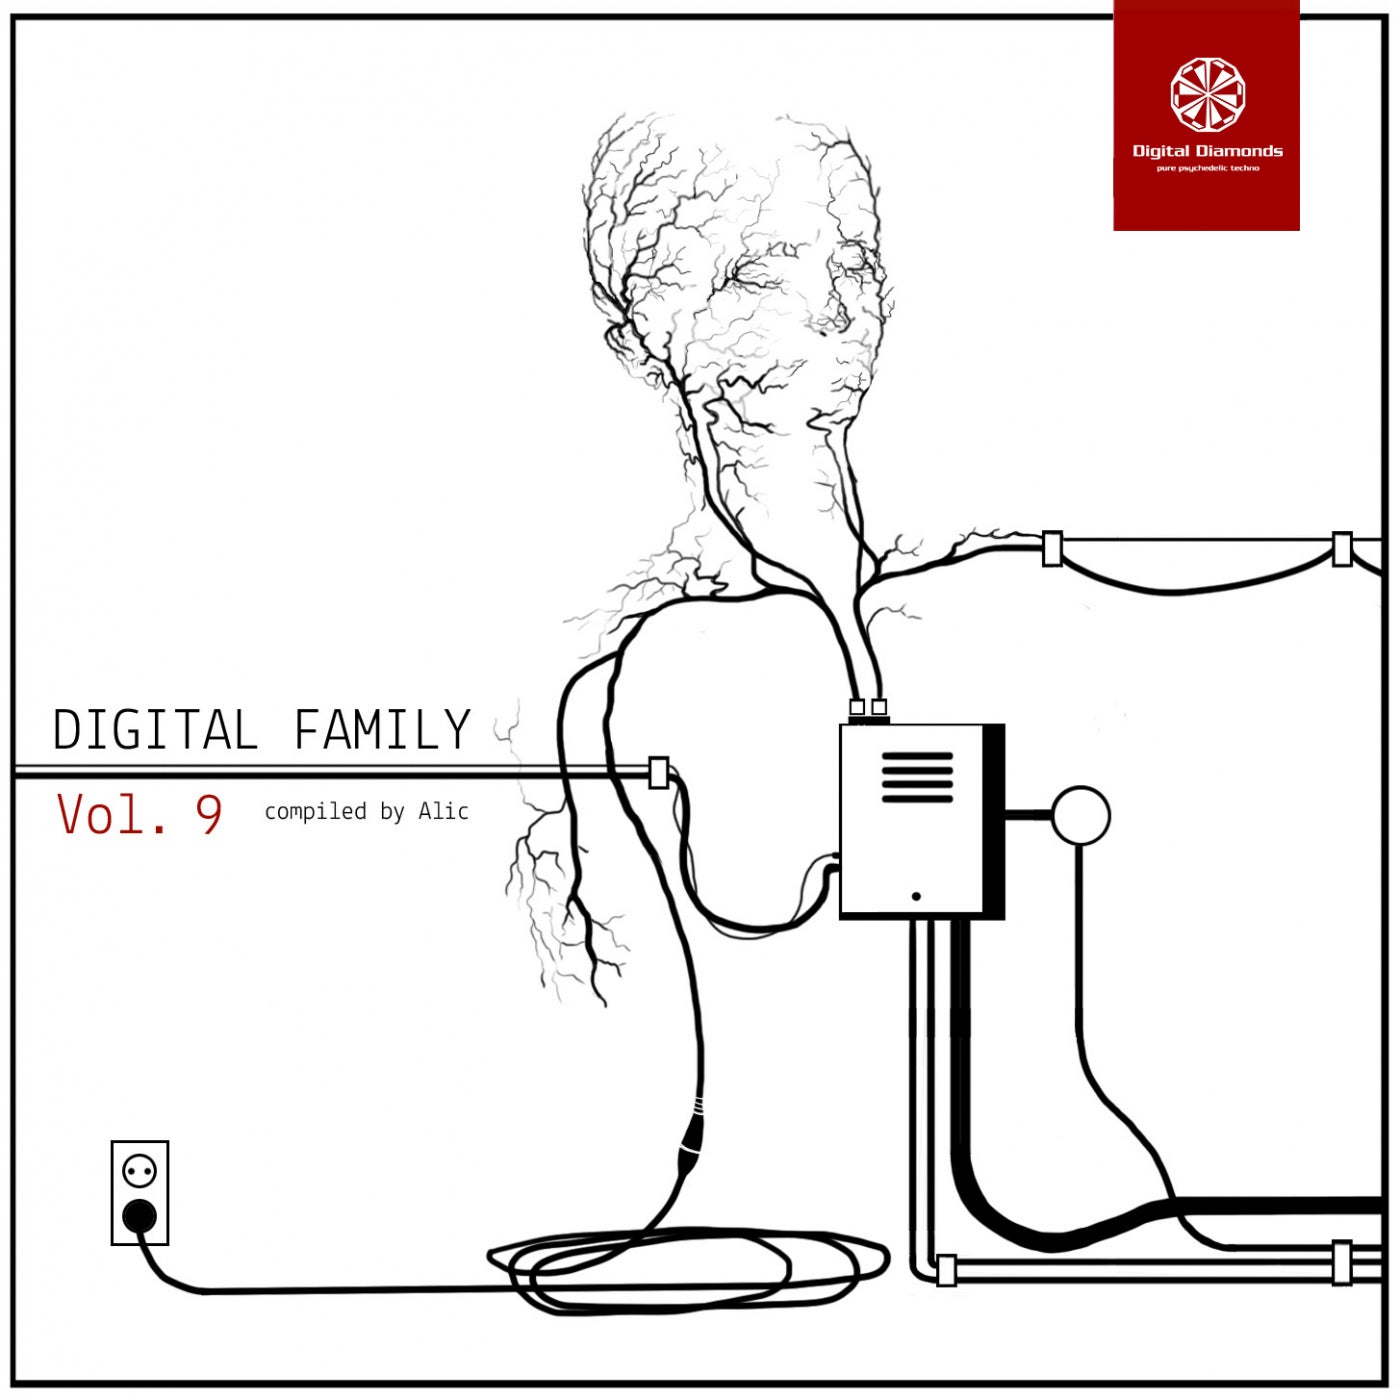 Digital Family Vol. 9